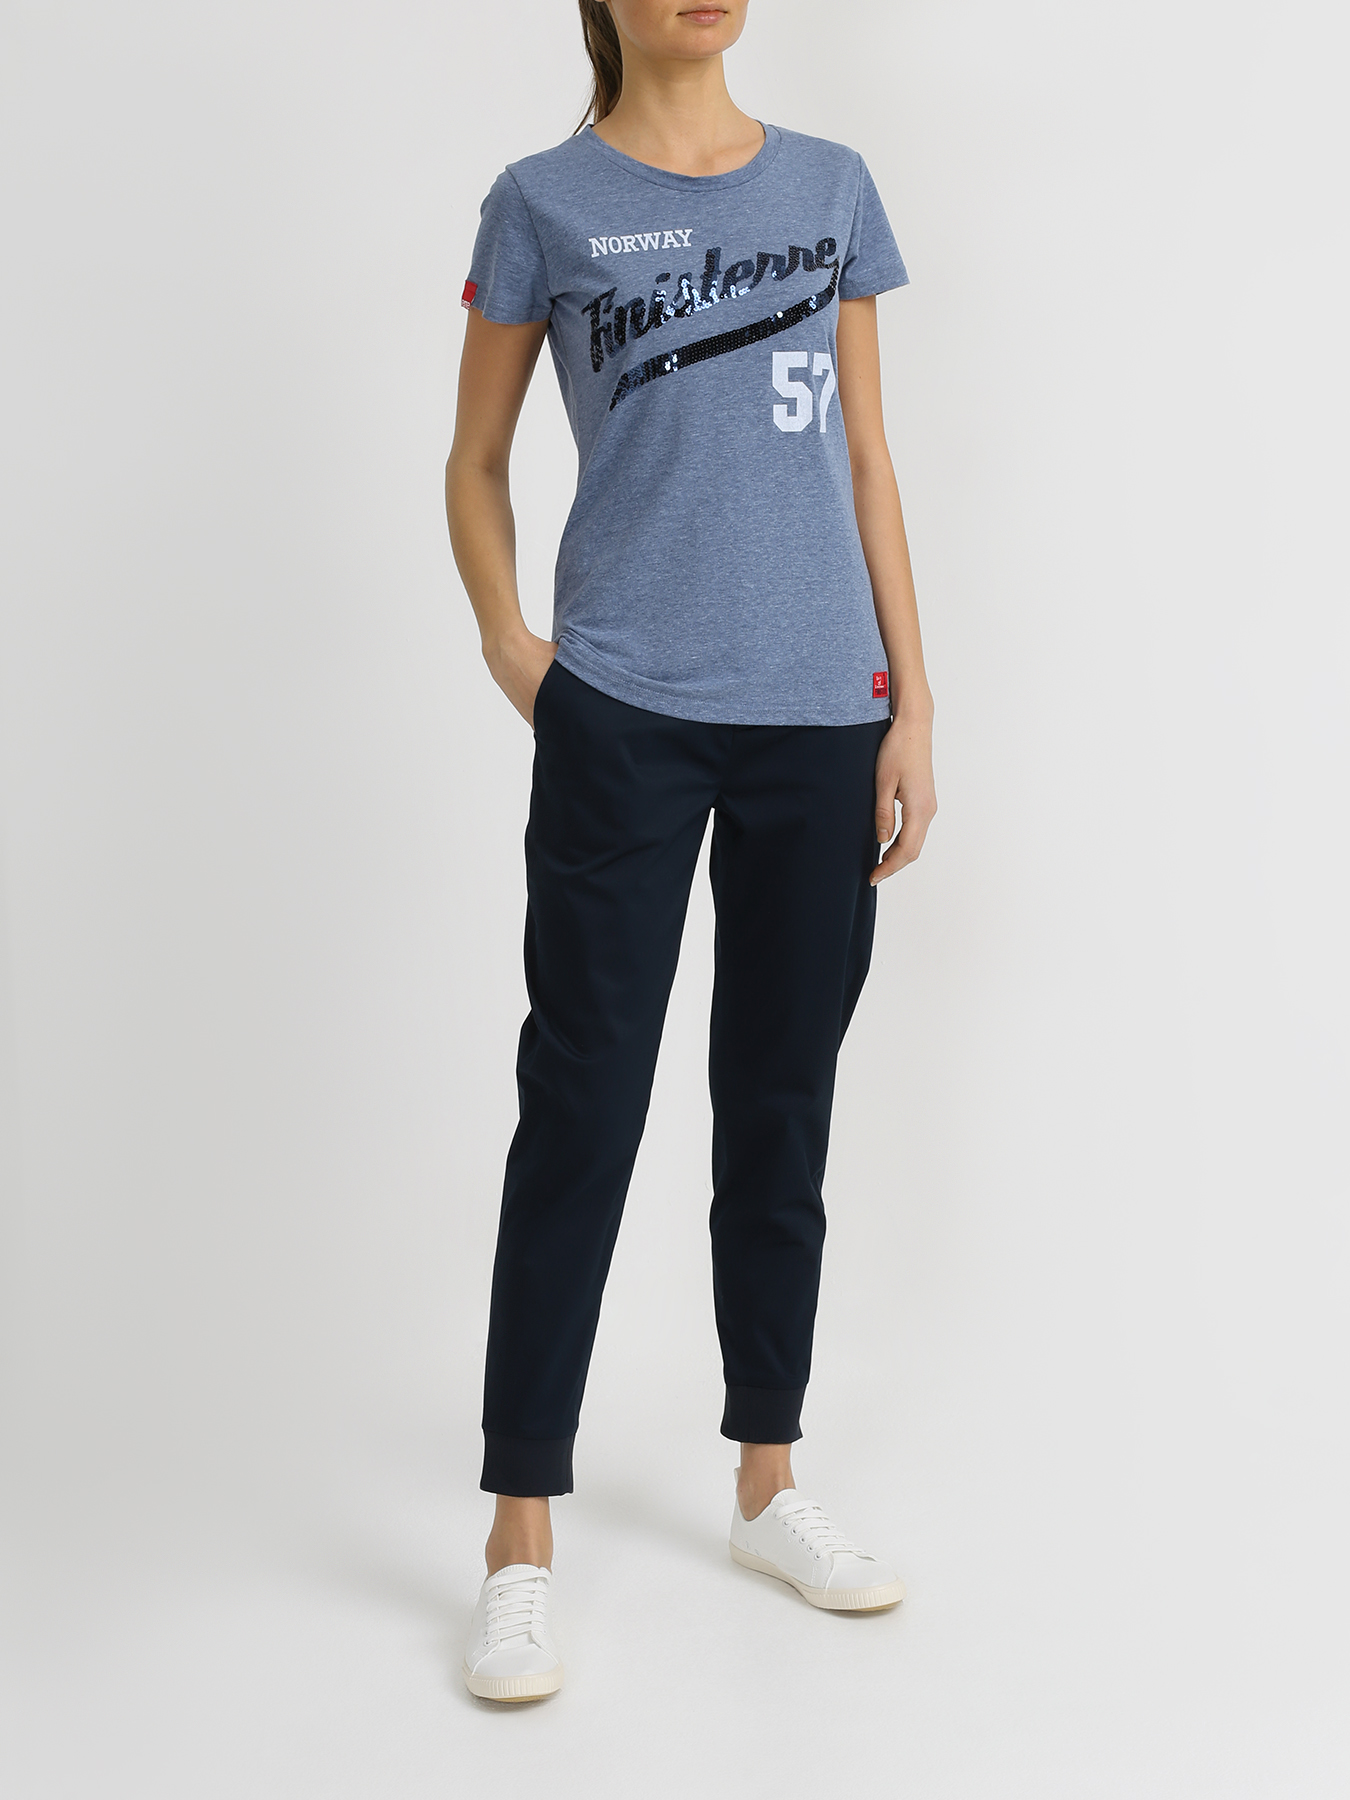 Finisterre Женская футболка с пайетками 322456-026